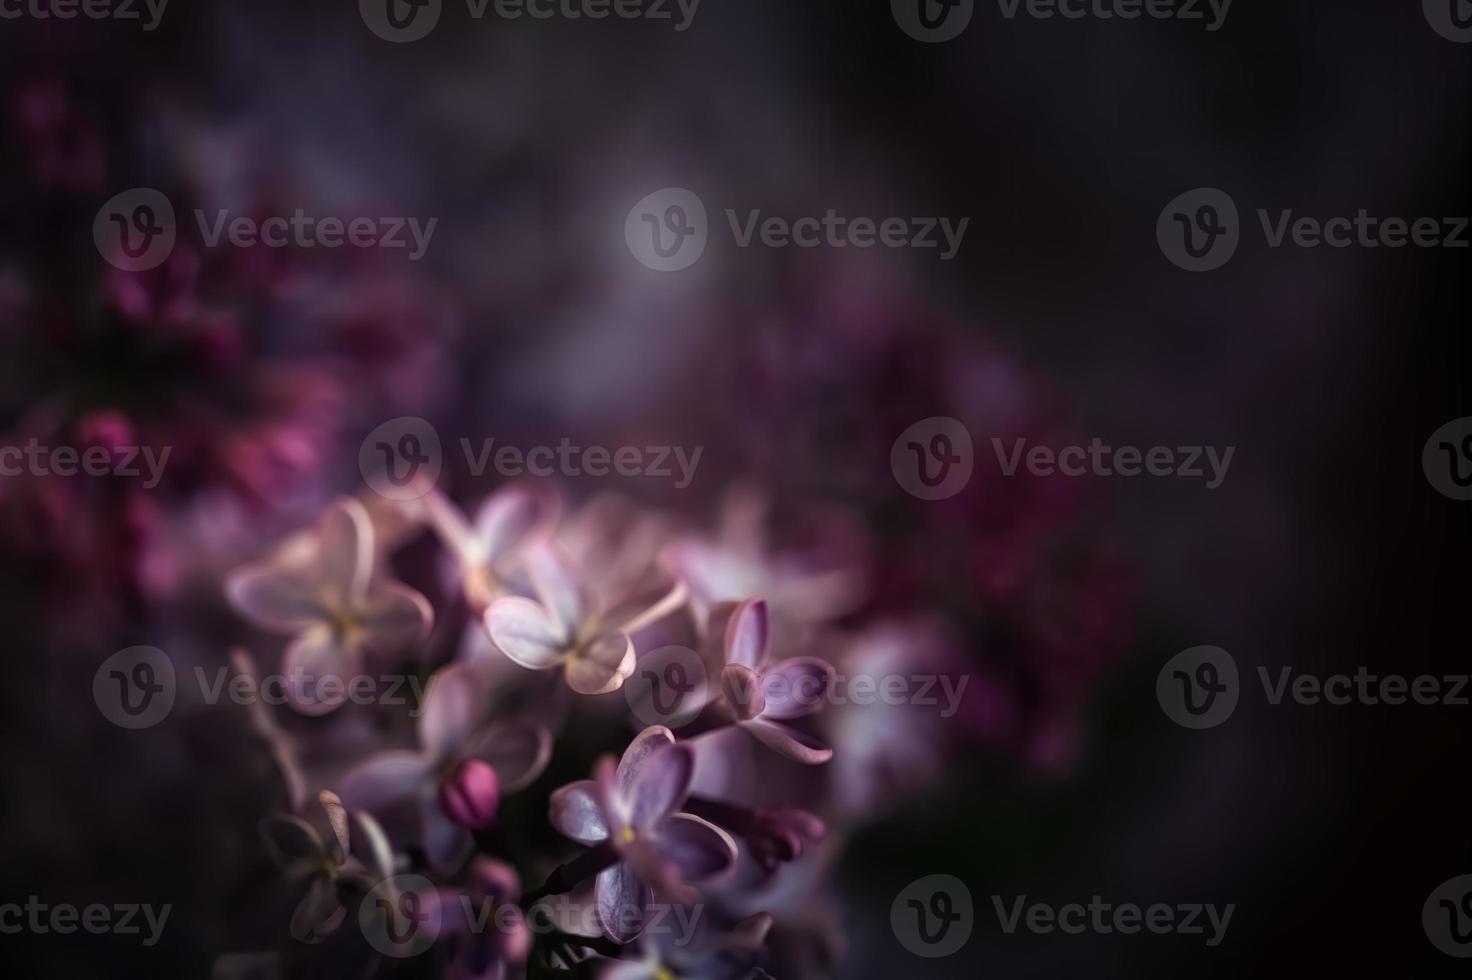 imagem de close-up de flores lilás na primavera foto